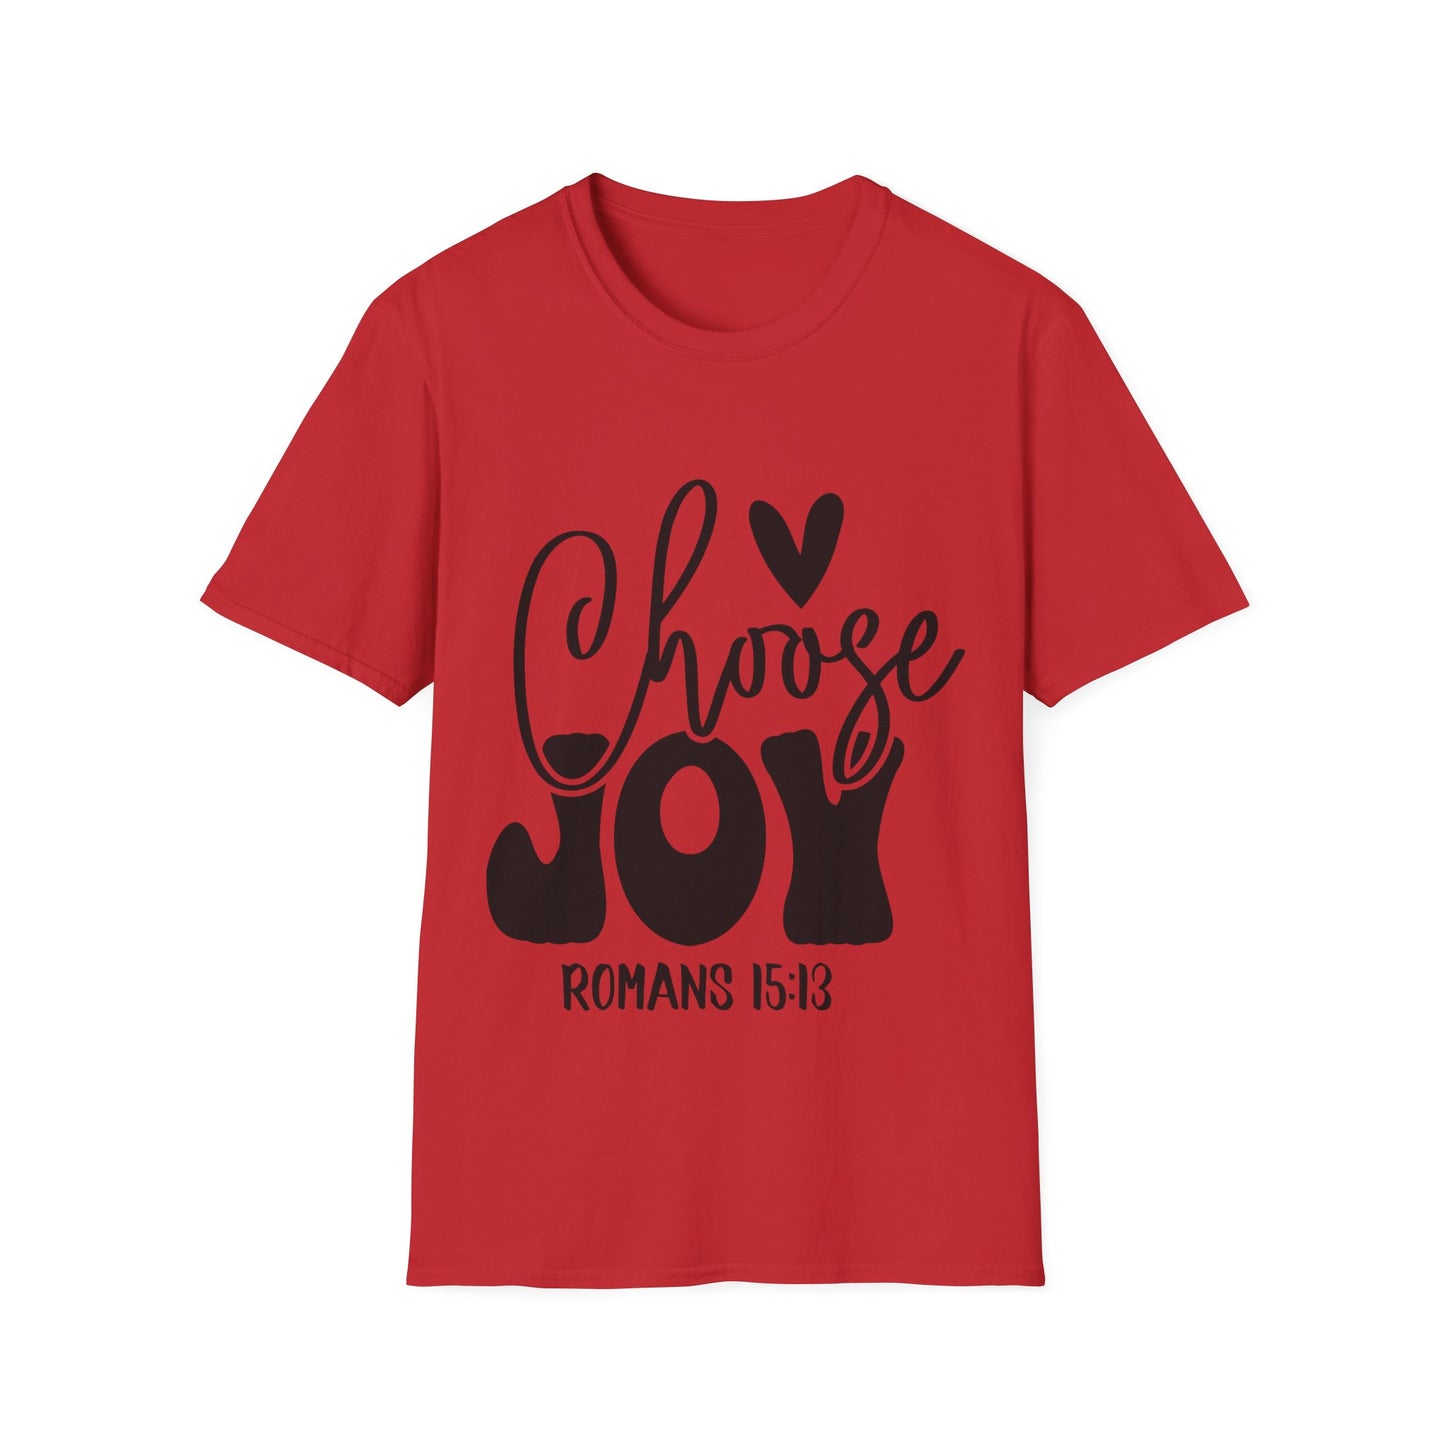 Choose Joy Romans 15:13 Triple Viking T-Shirt